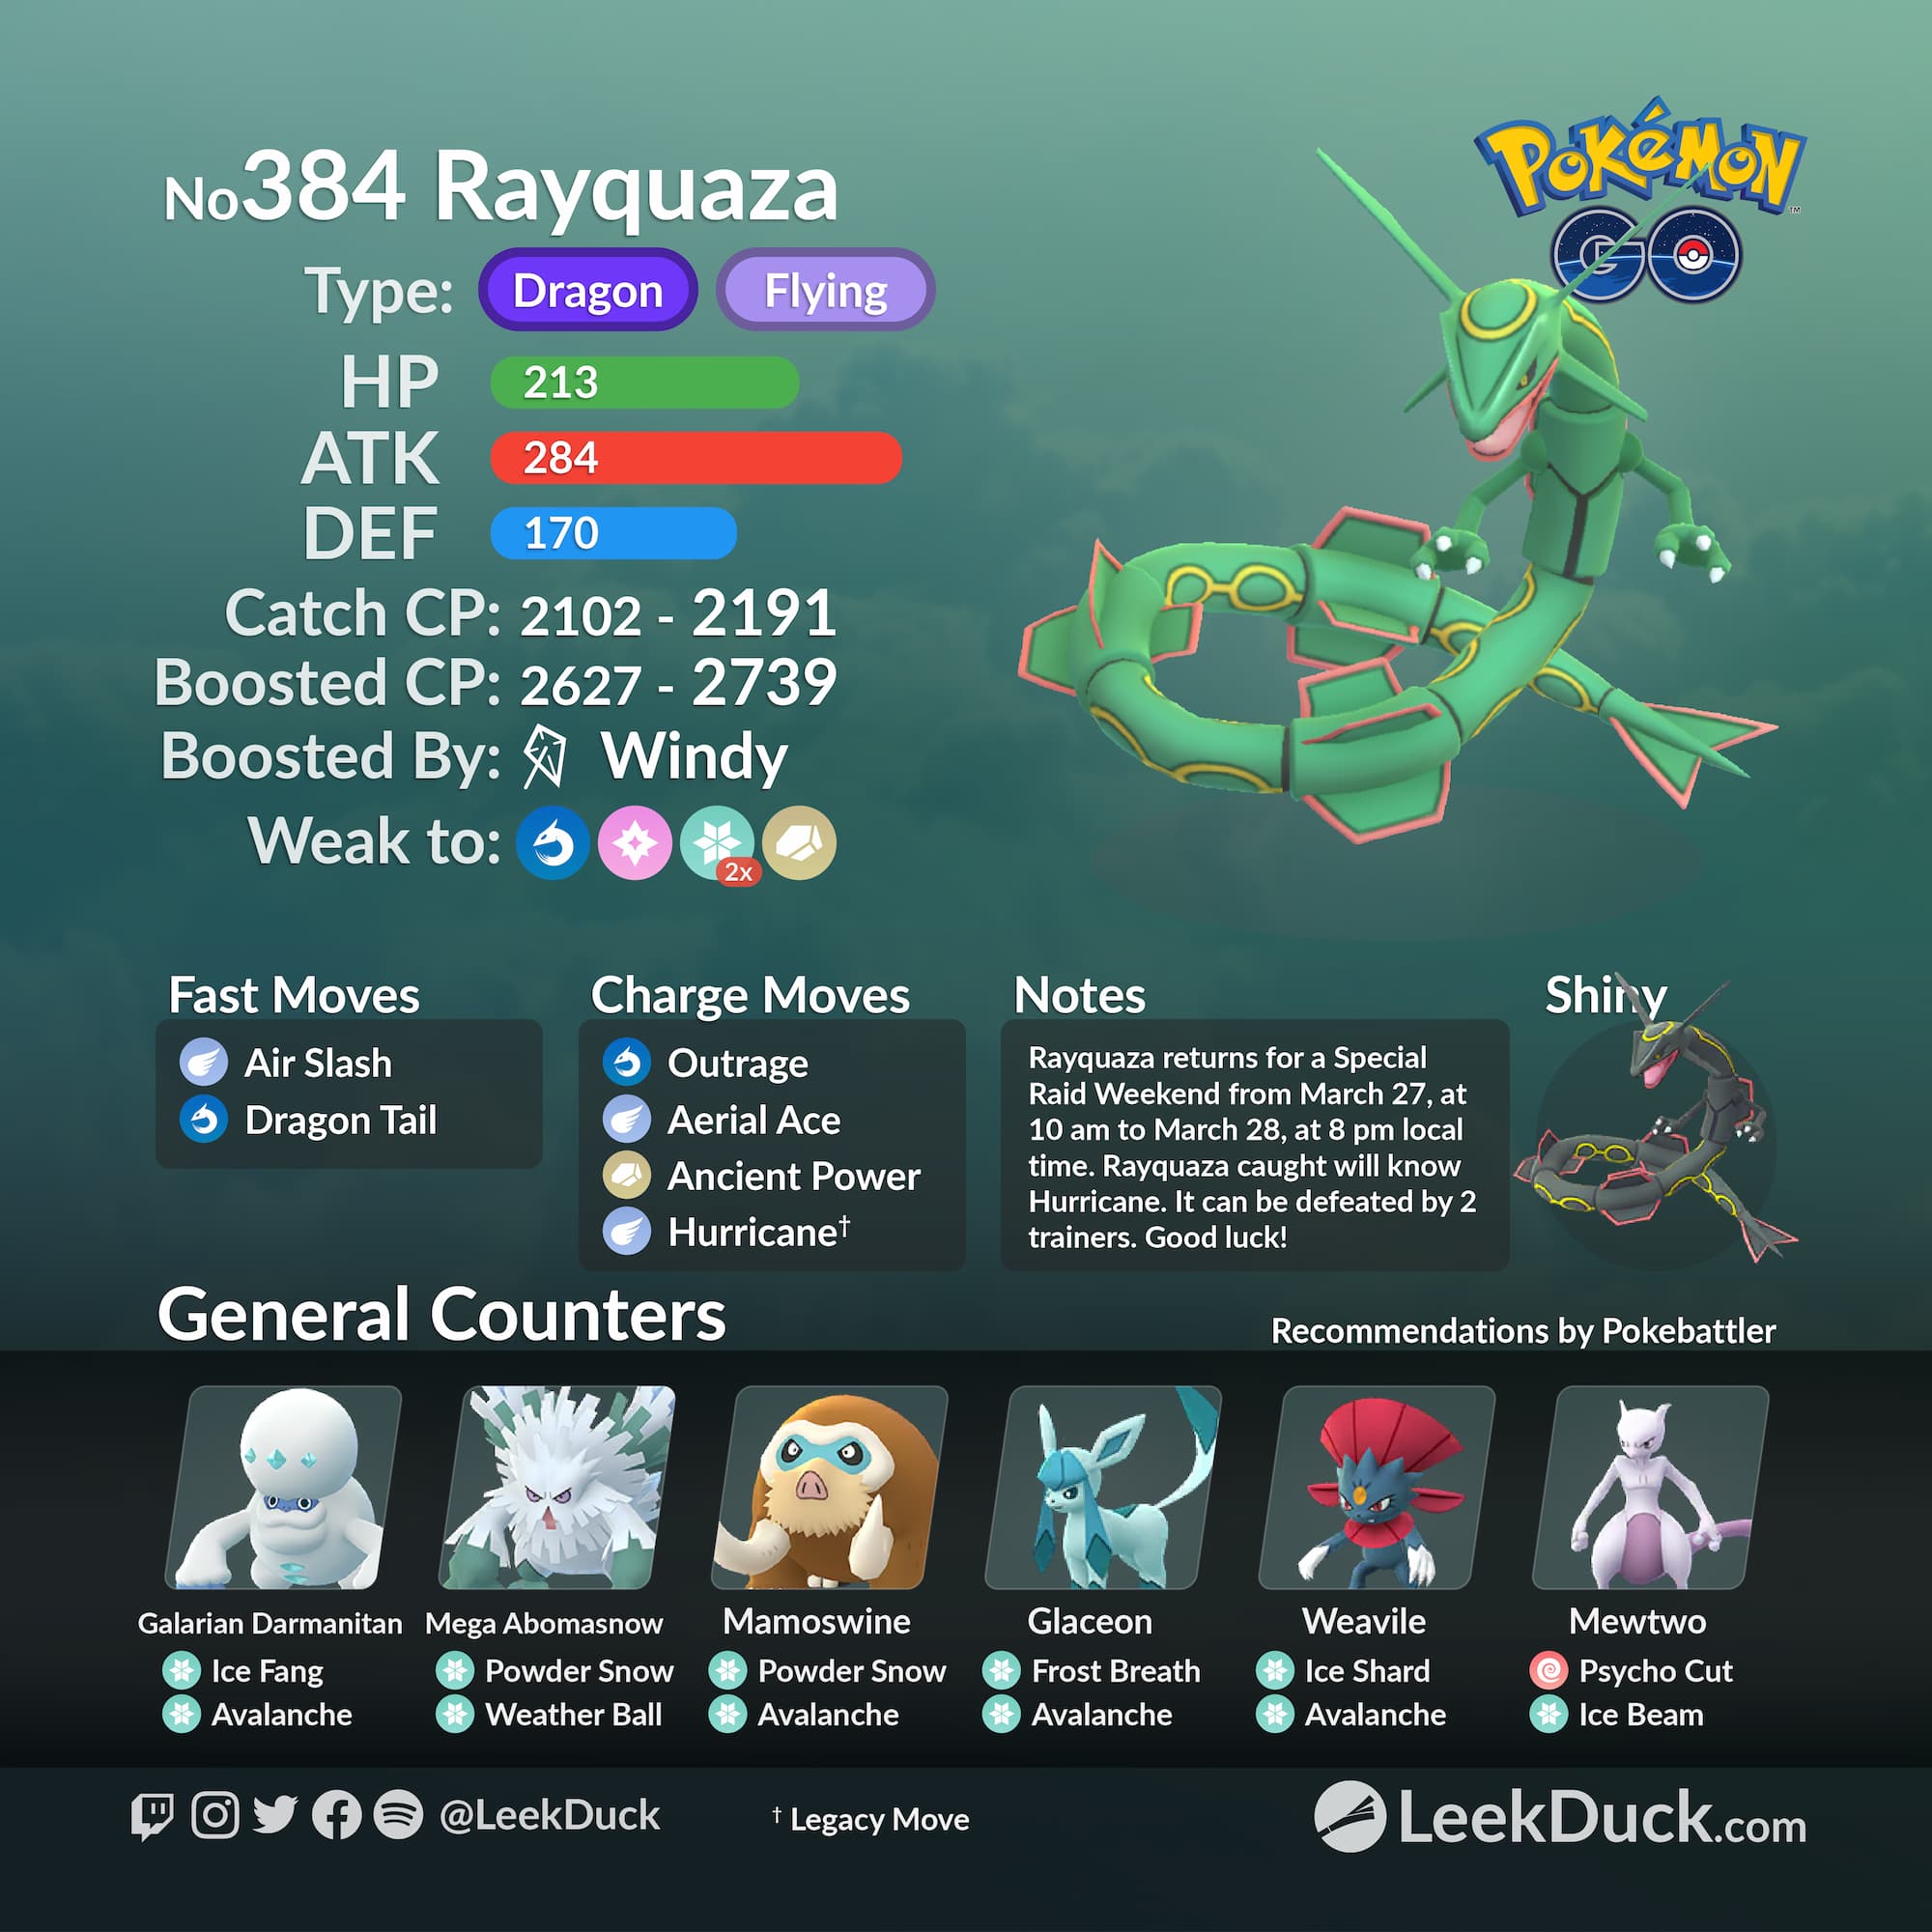 Pokemon Go: Legendary Rayquaza Guide - Counters, Weaknesses, Shiny